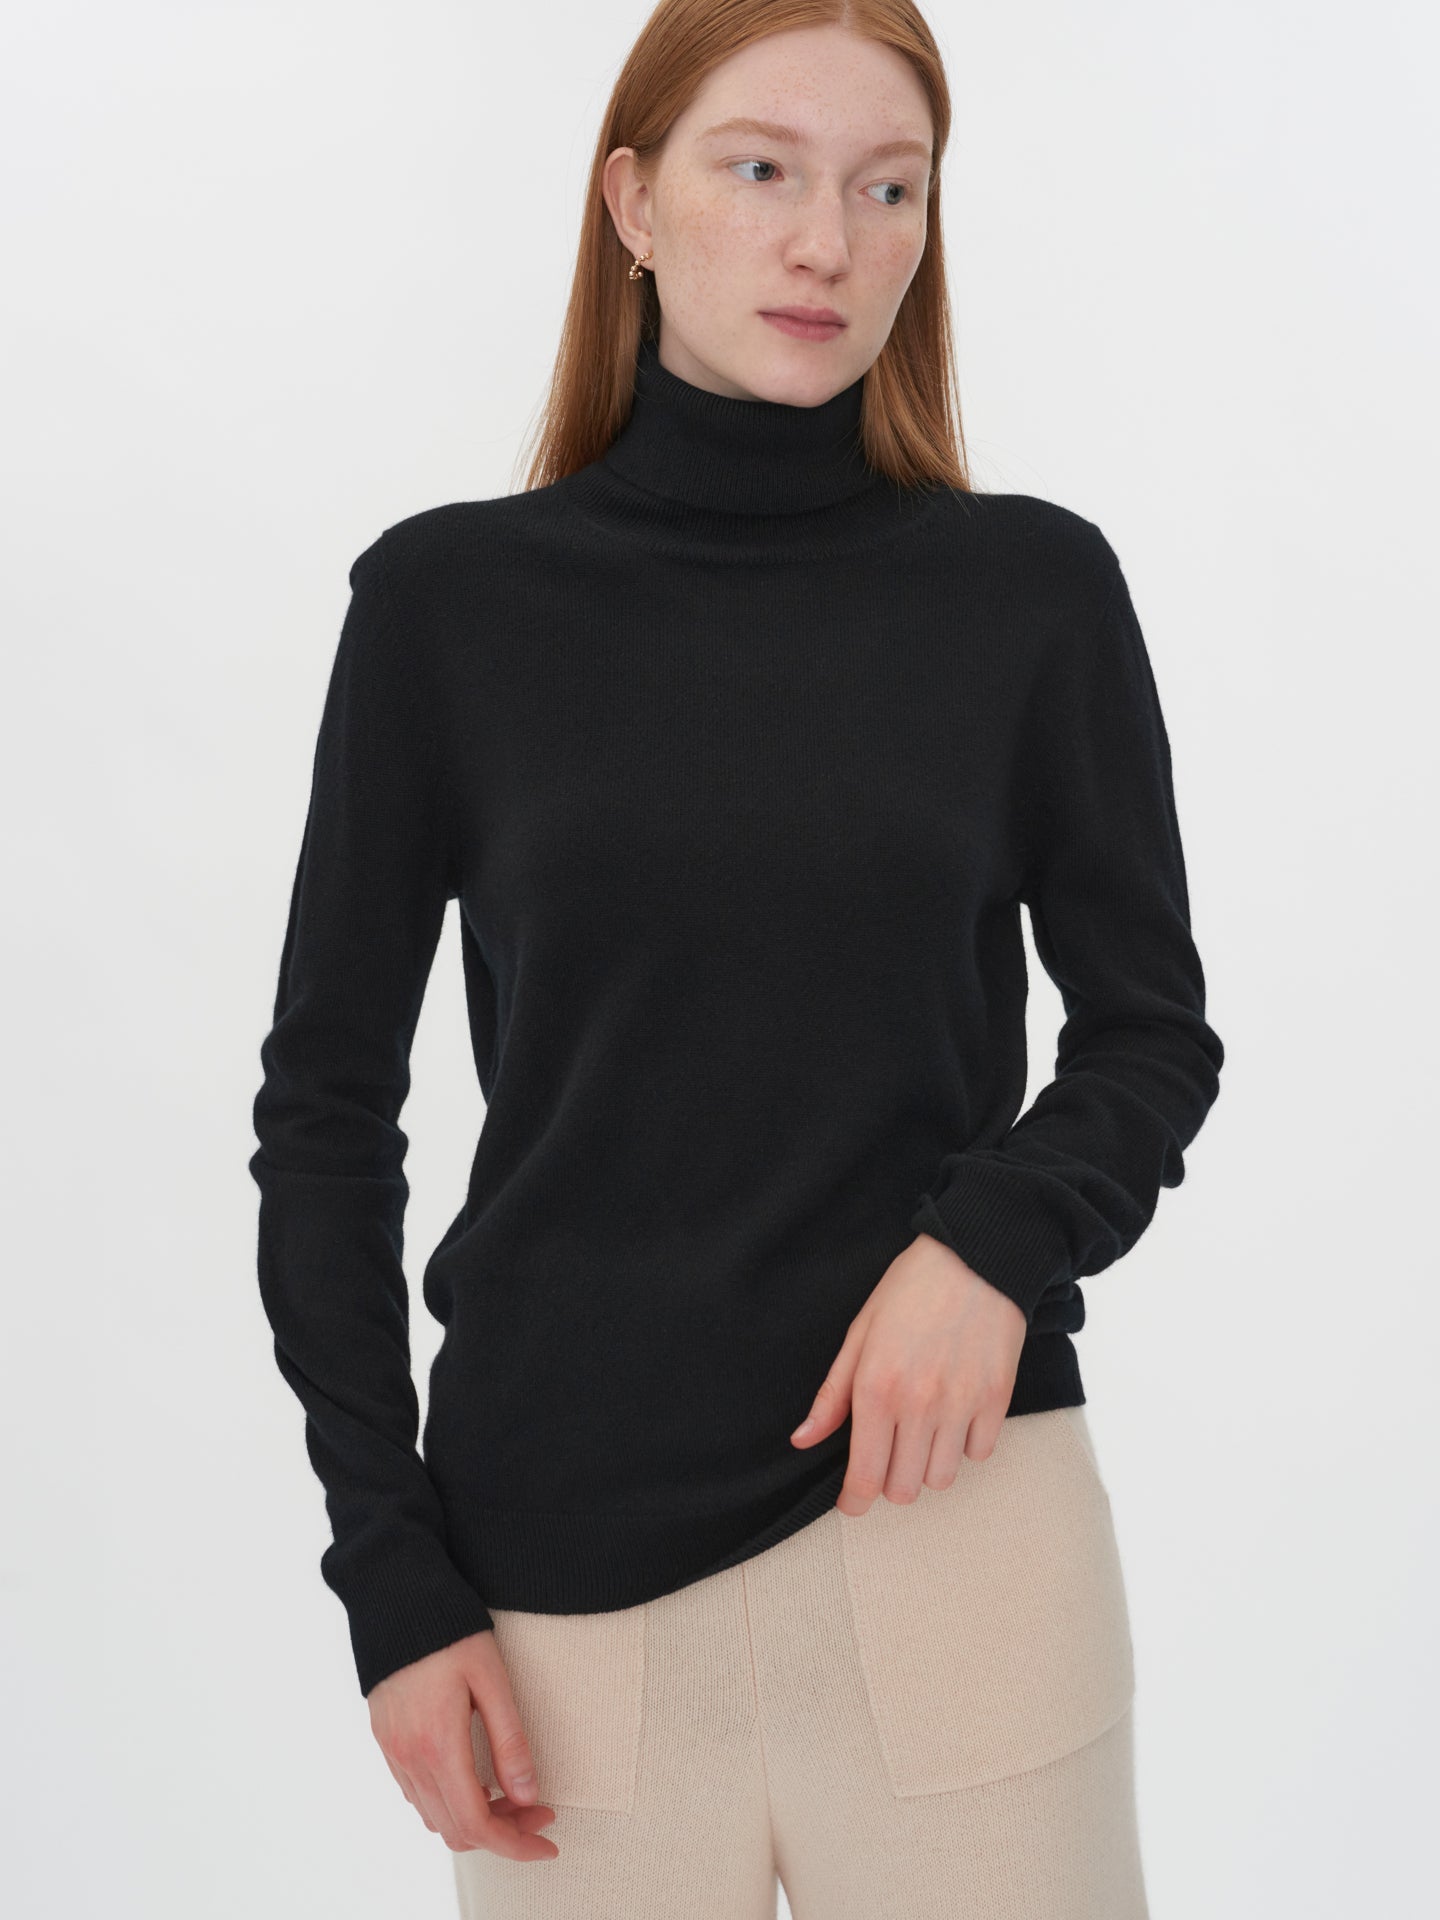 Women's Cashmere Basic Turtle Neck Sweater Black - Gobi Cashmere